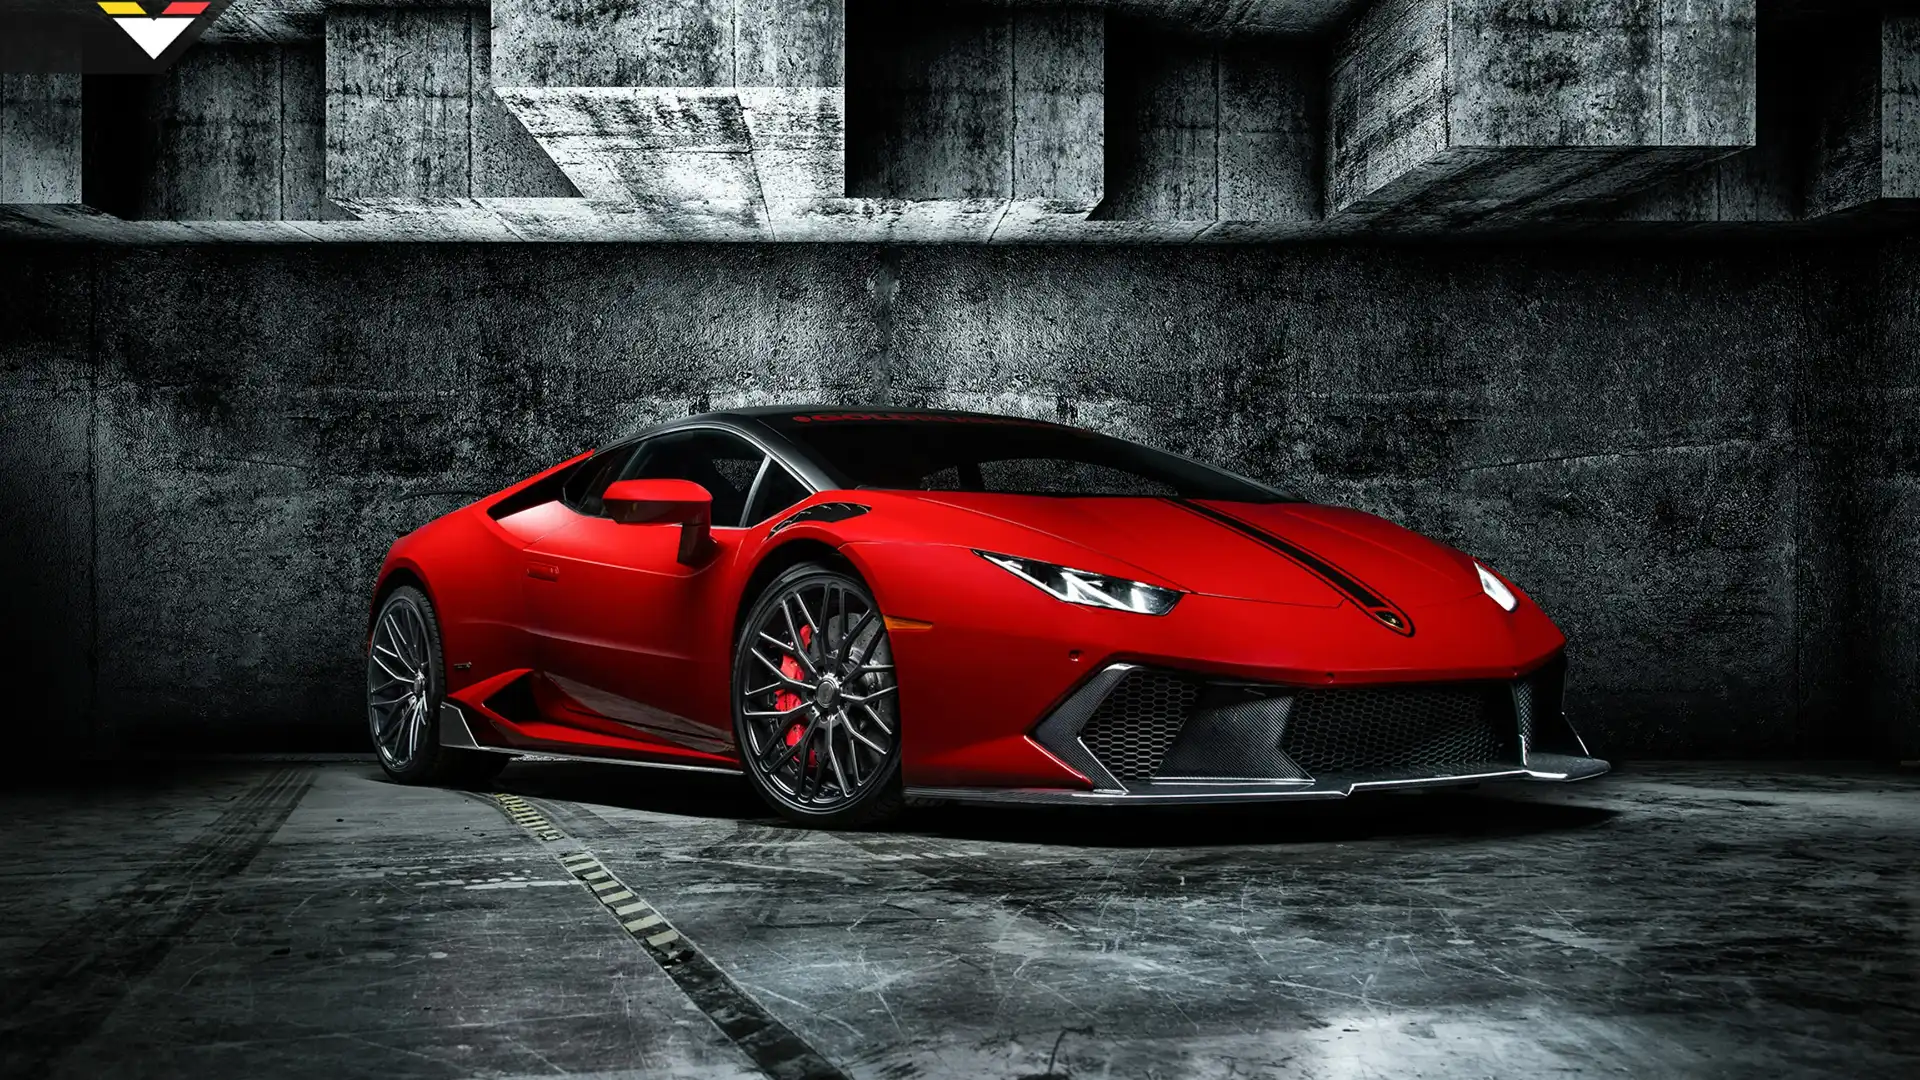 Red Lamborghini Background Images